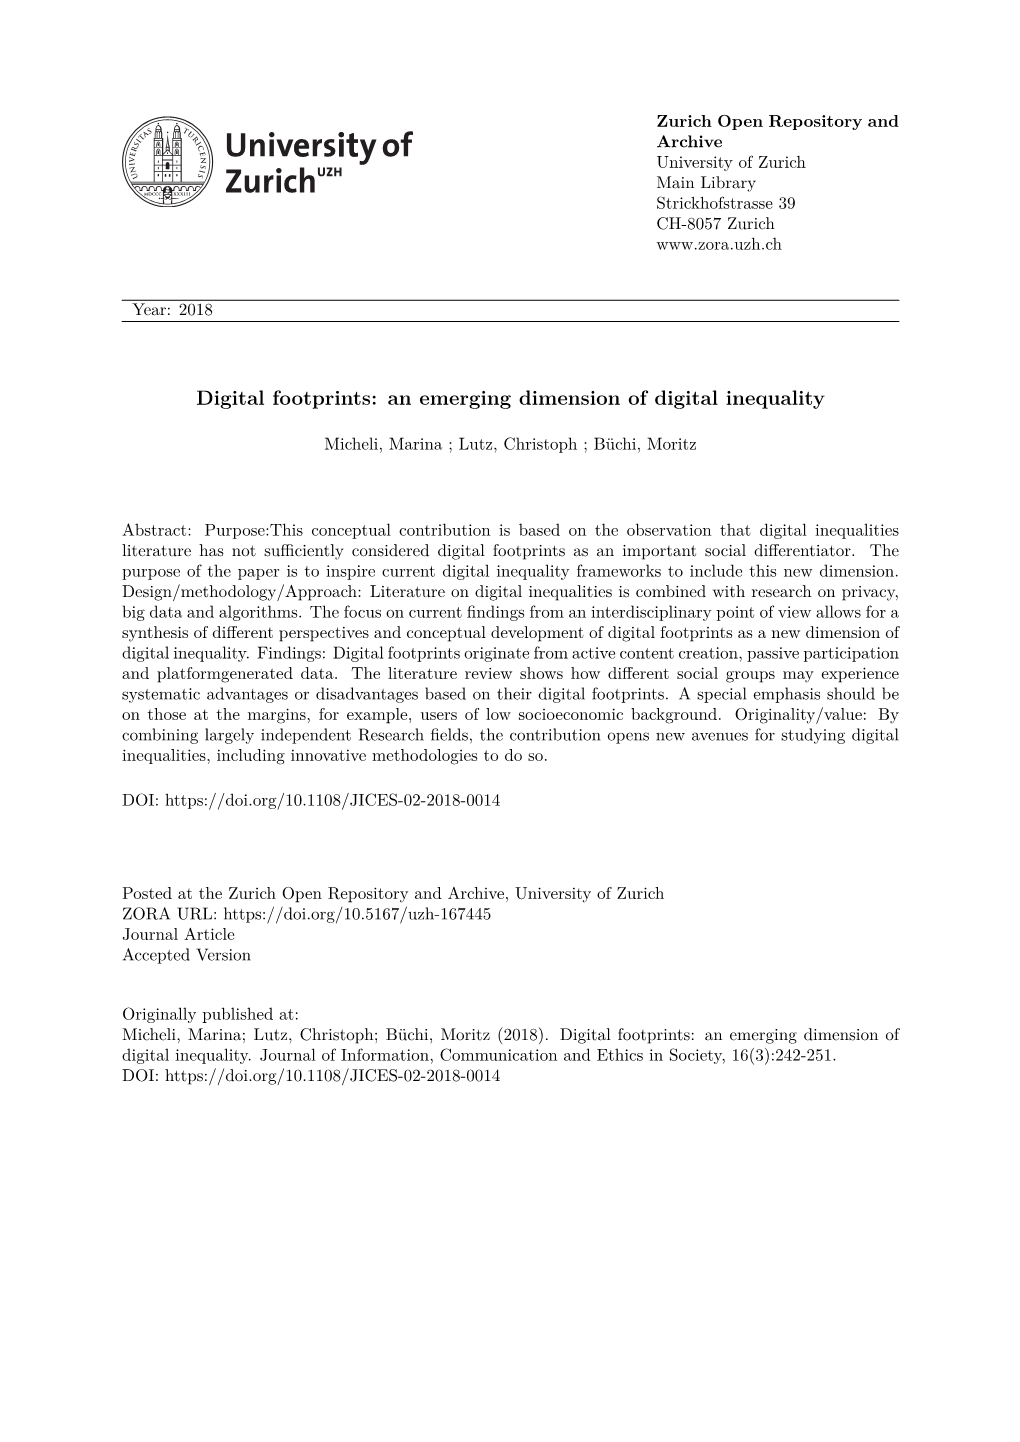 Digital Footprints: an Emerging Dimension of Digital Inequality